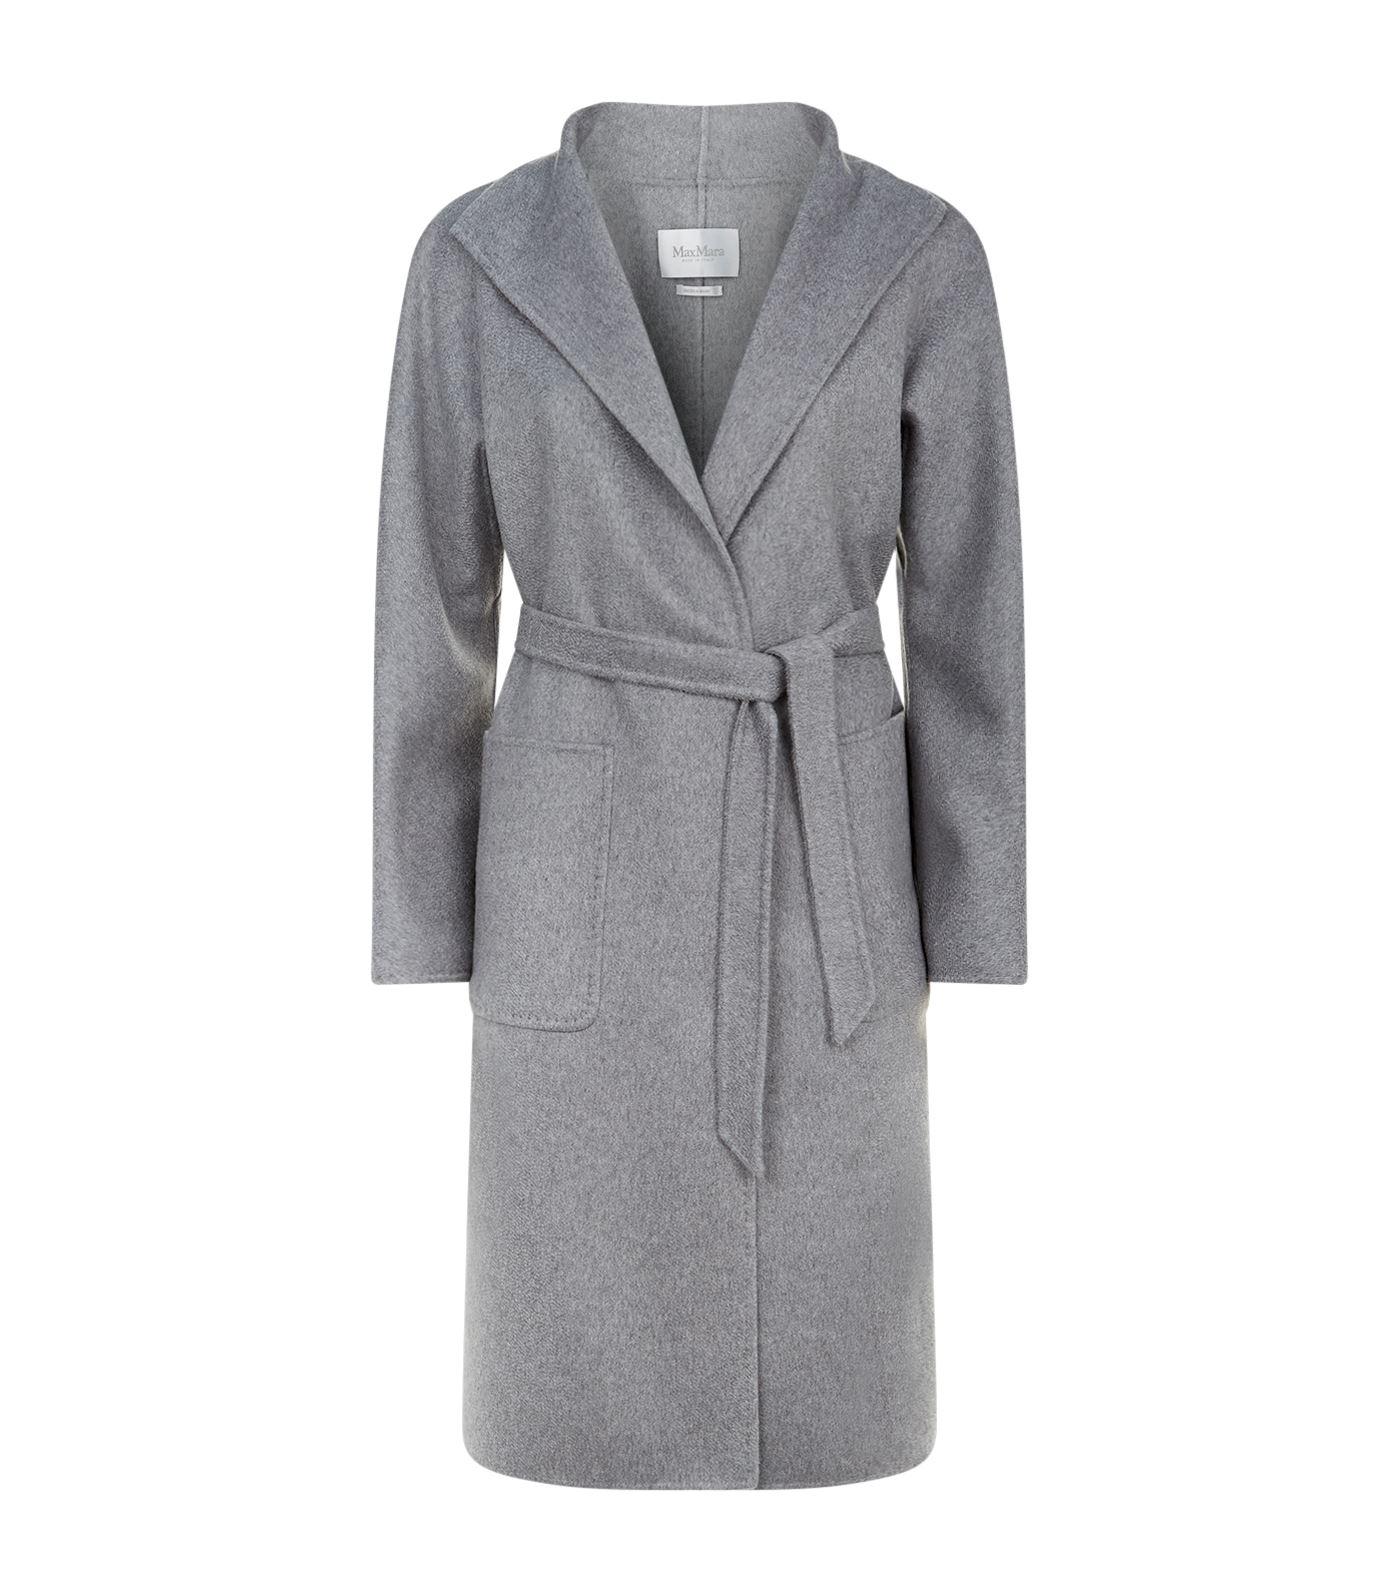 Max Mara Lilia Cashmere Coat in Grey (Gray) - Save 2% - Lyst